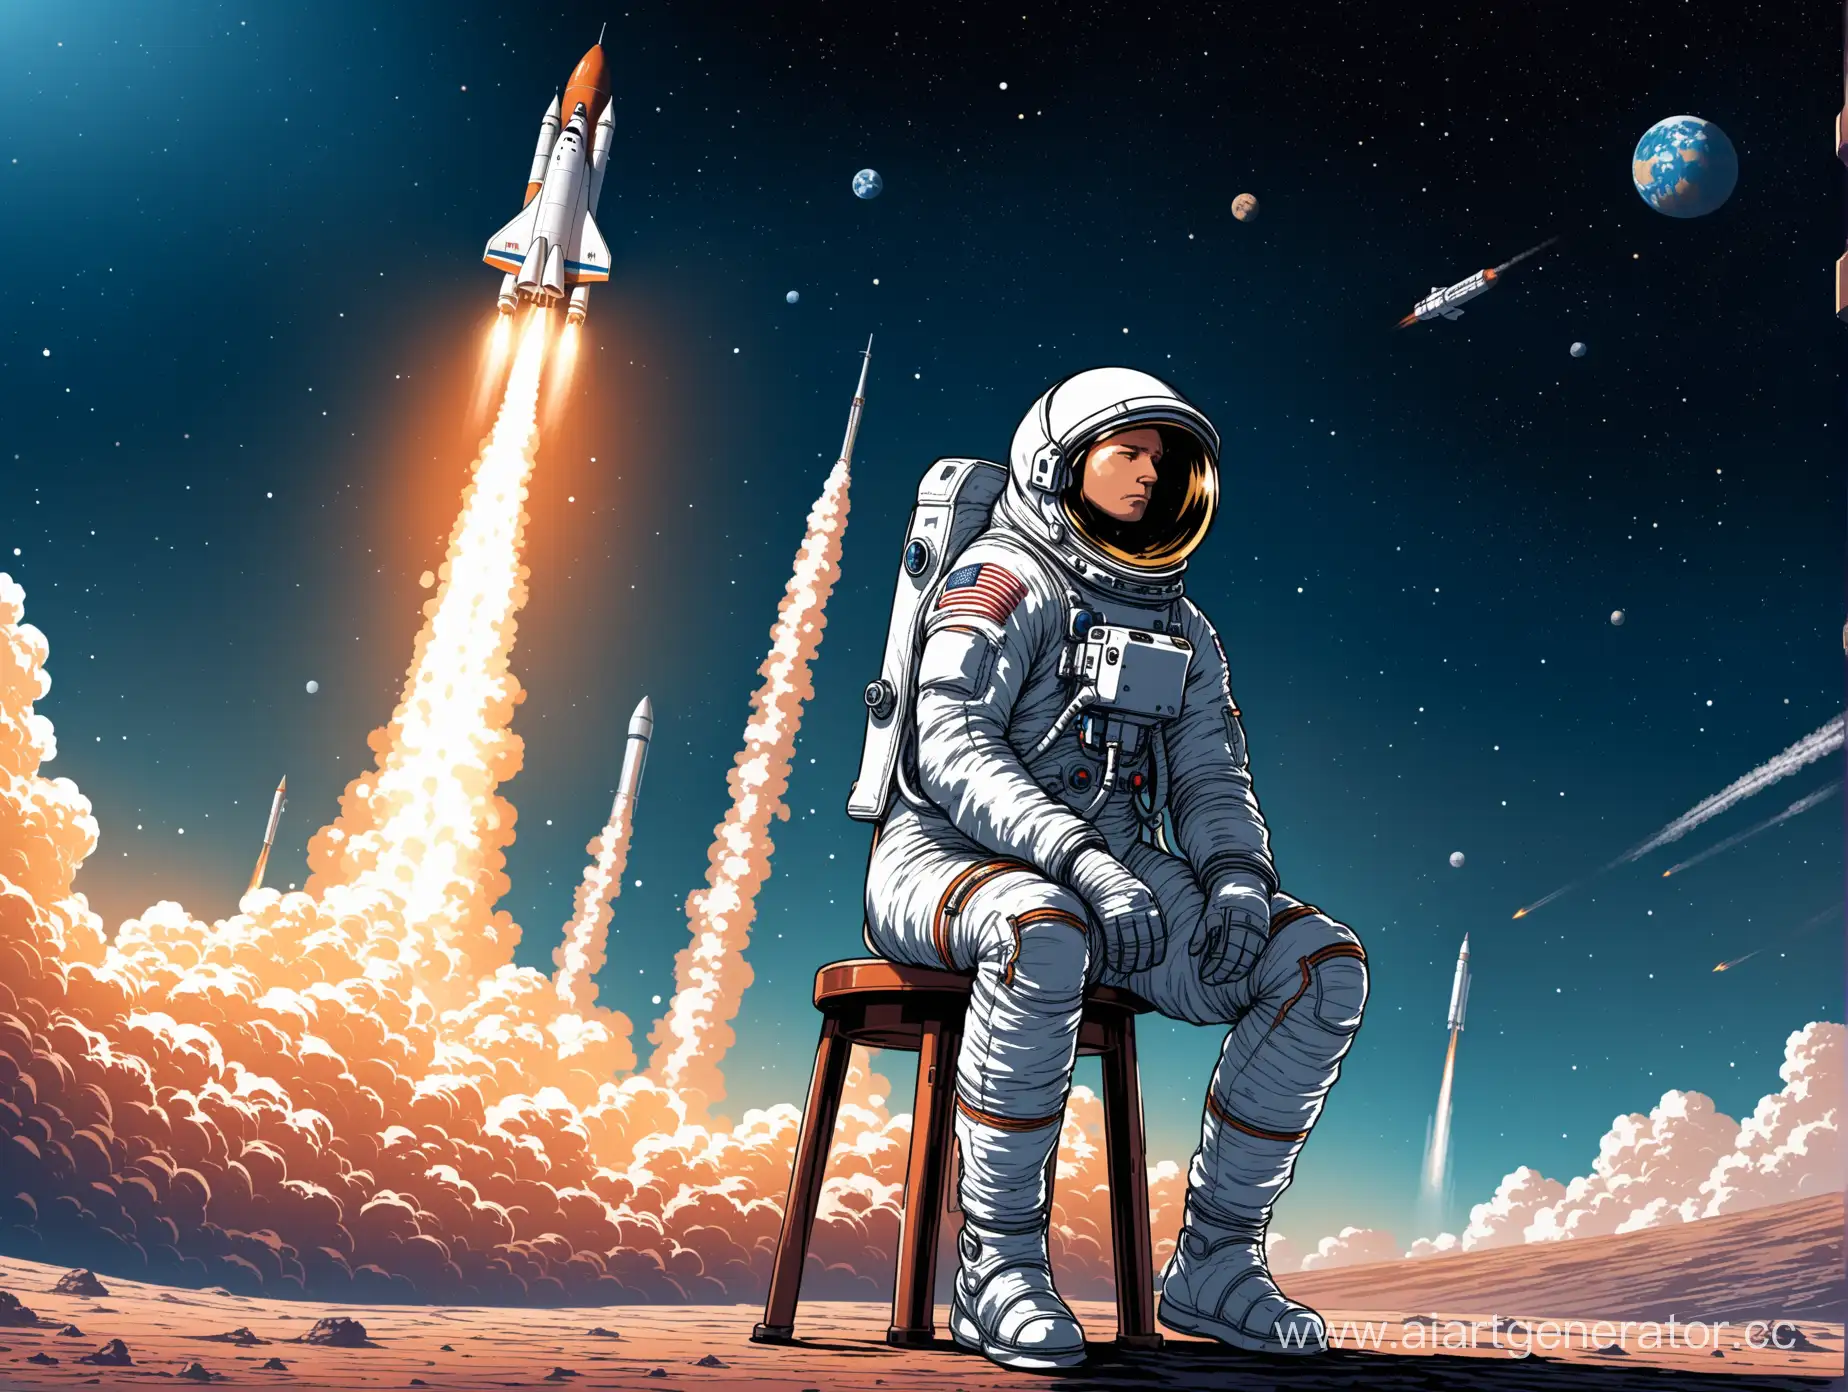 Dejected-Astronaut-Sitting-by-Ascending-Rocket